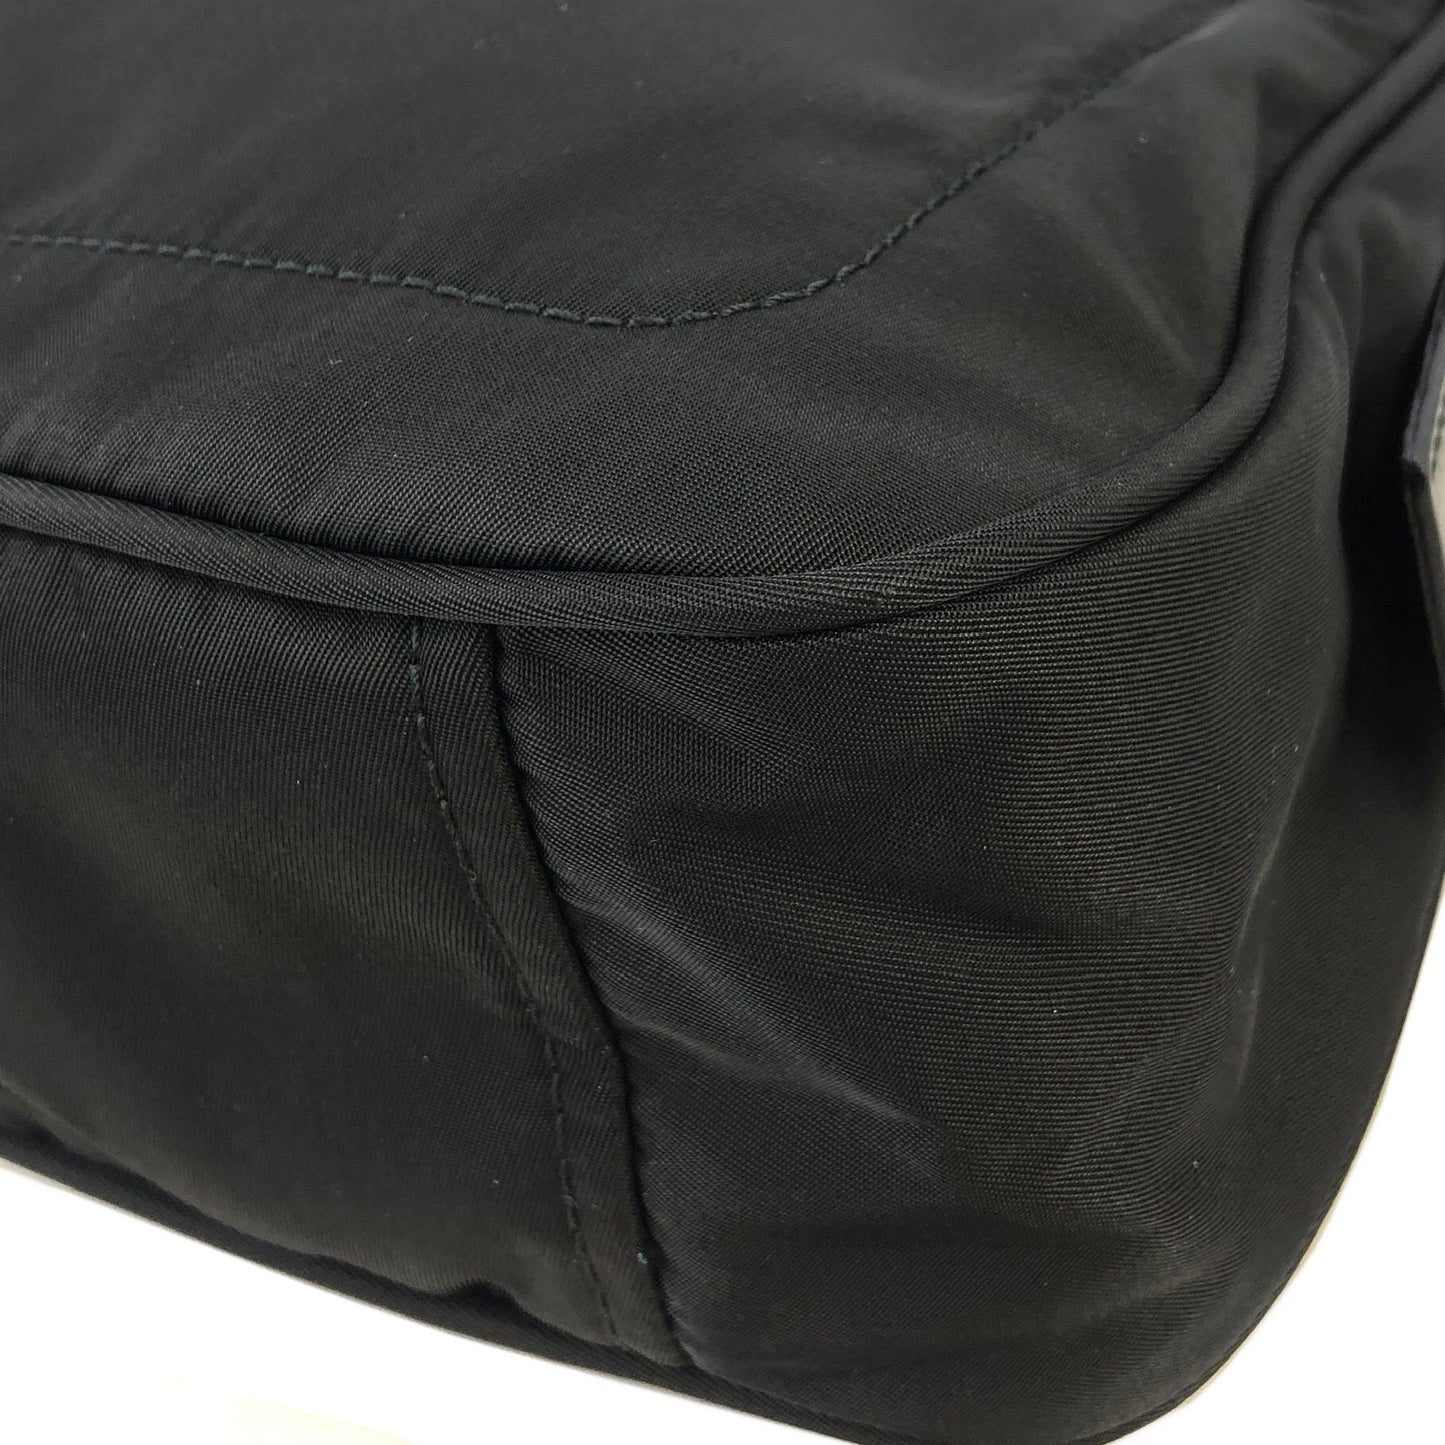 PRADA Triangle Logo Nylon Mini Boston Front Pocket Shoulder Bag Black Vintage Old hgxatd